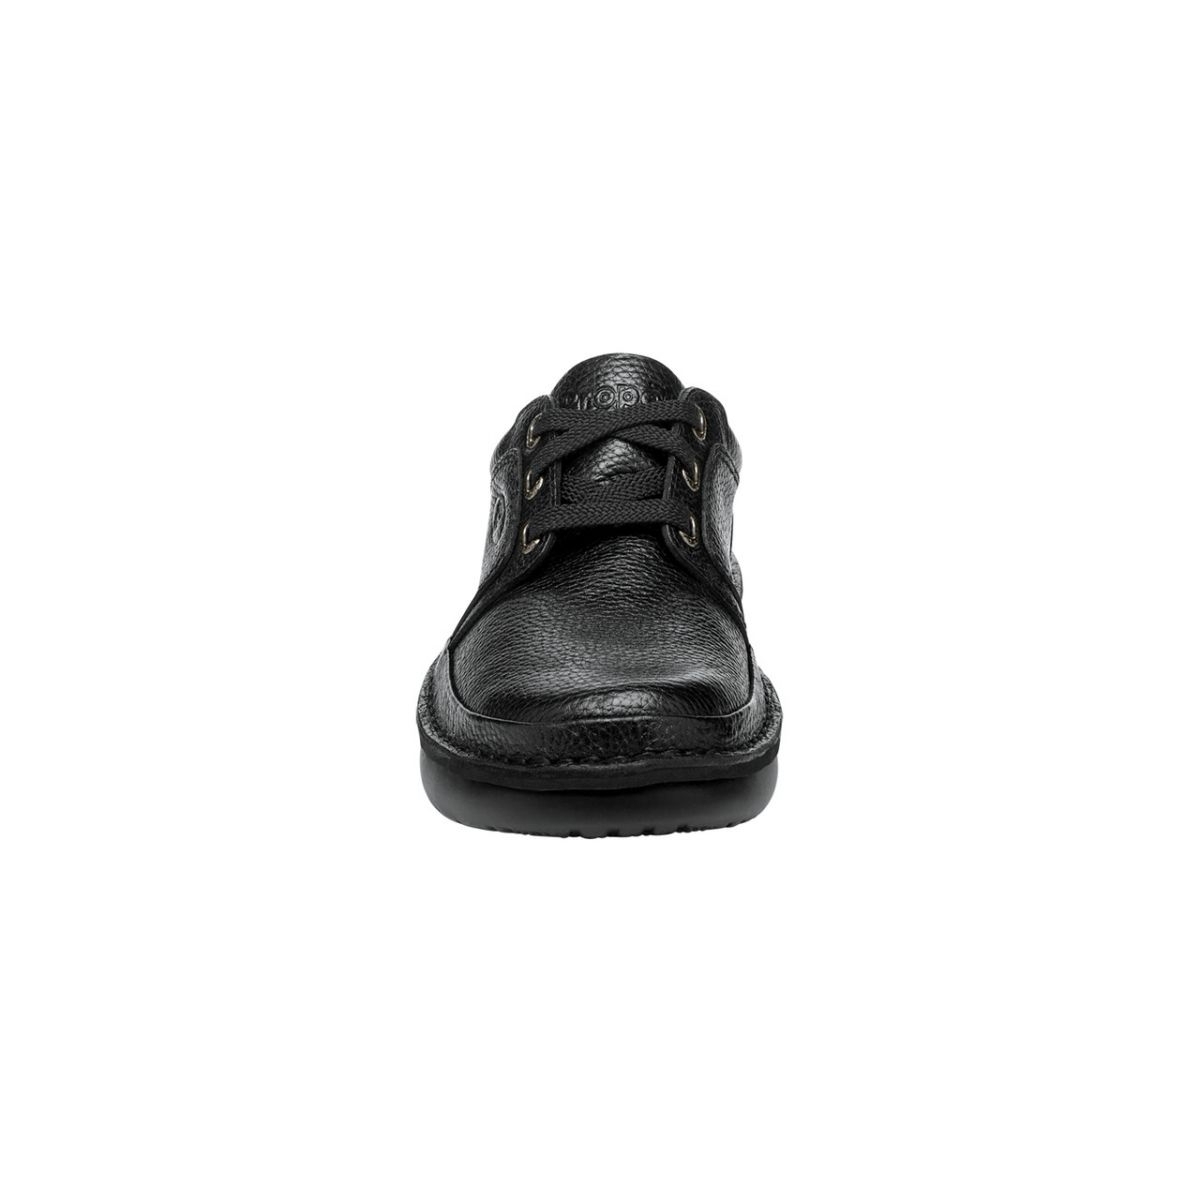 Propet Men's Villager Oxford Black Tumbled Leather - M4070B BLACK - BLACK, 10.5-XW